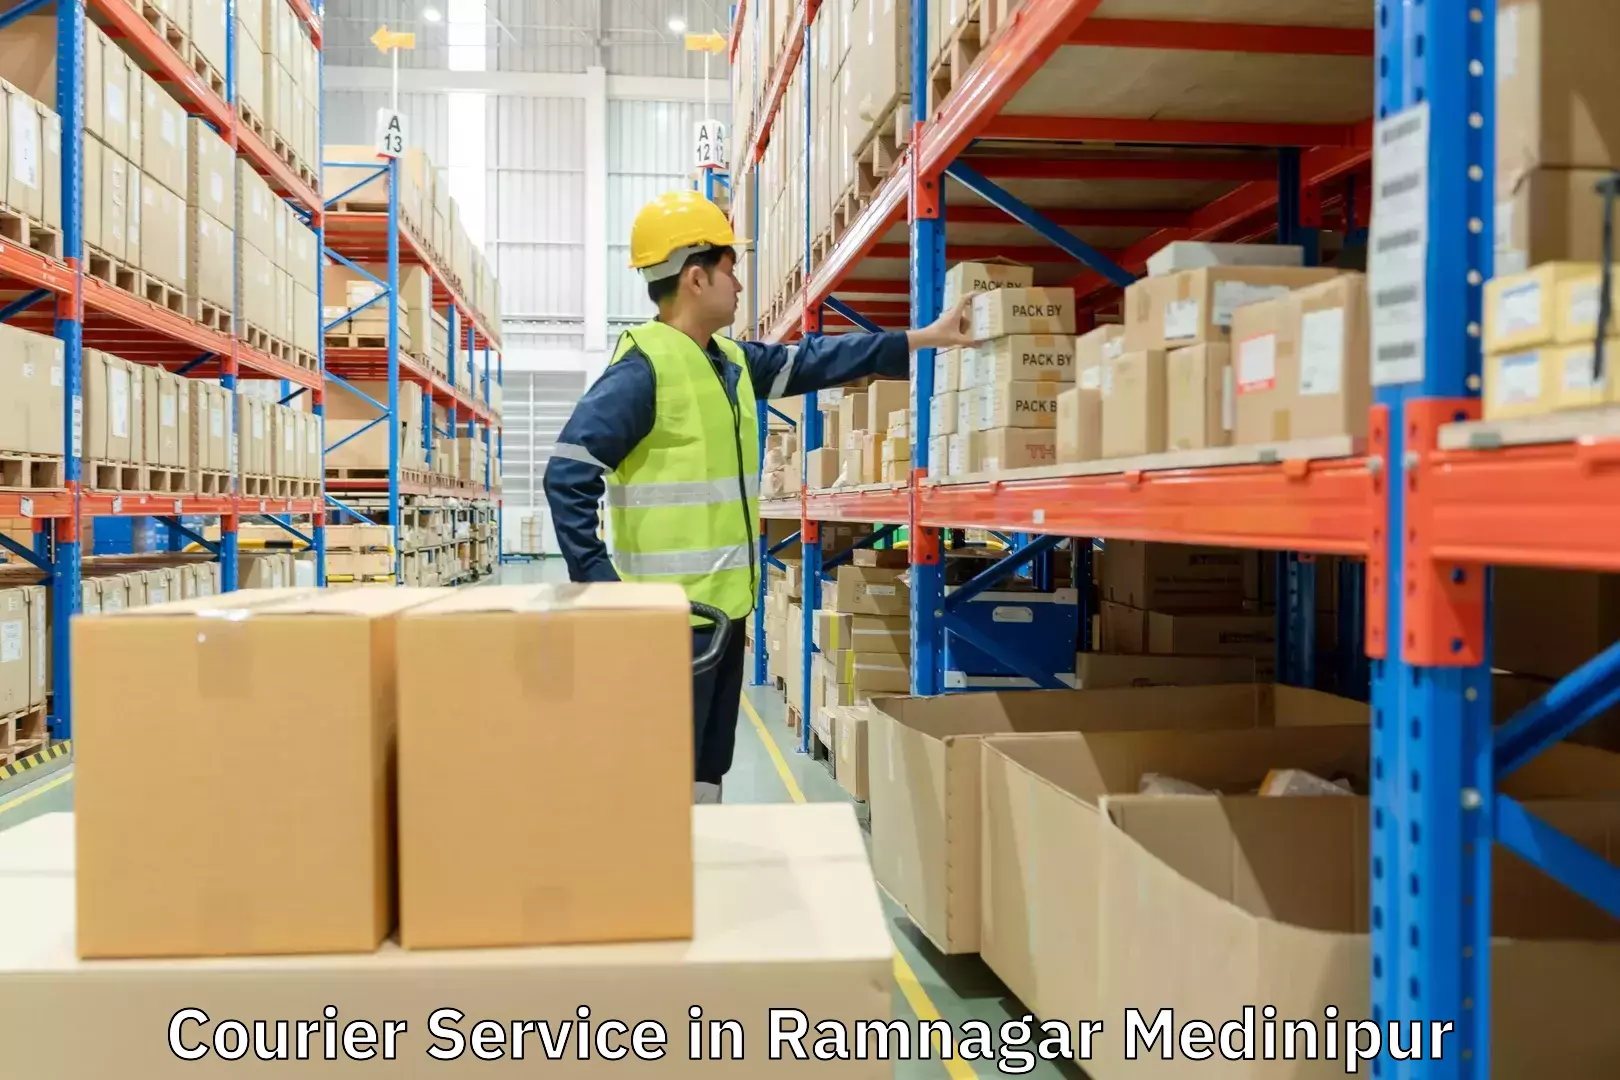 Delivery service partnership in Ramnagar Medinipur